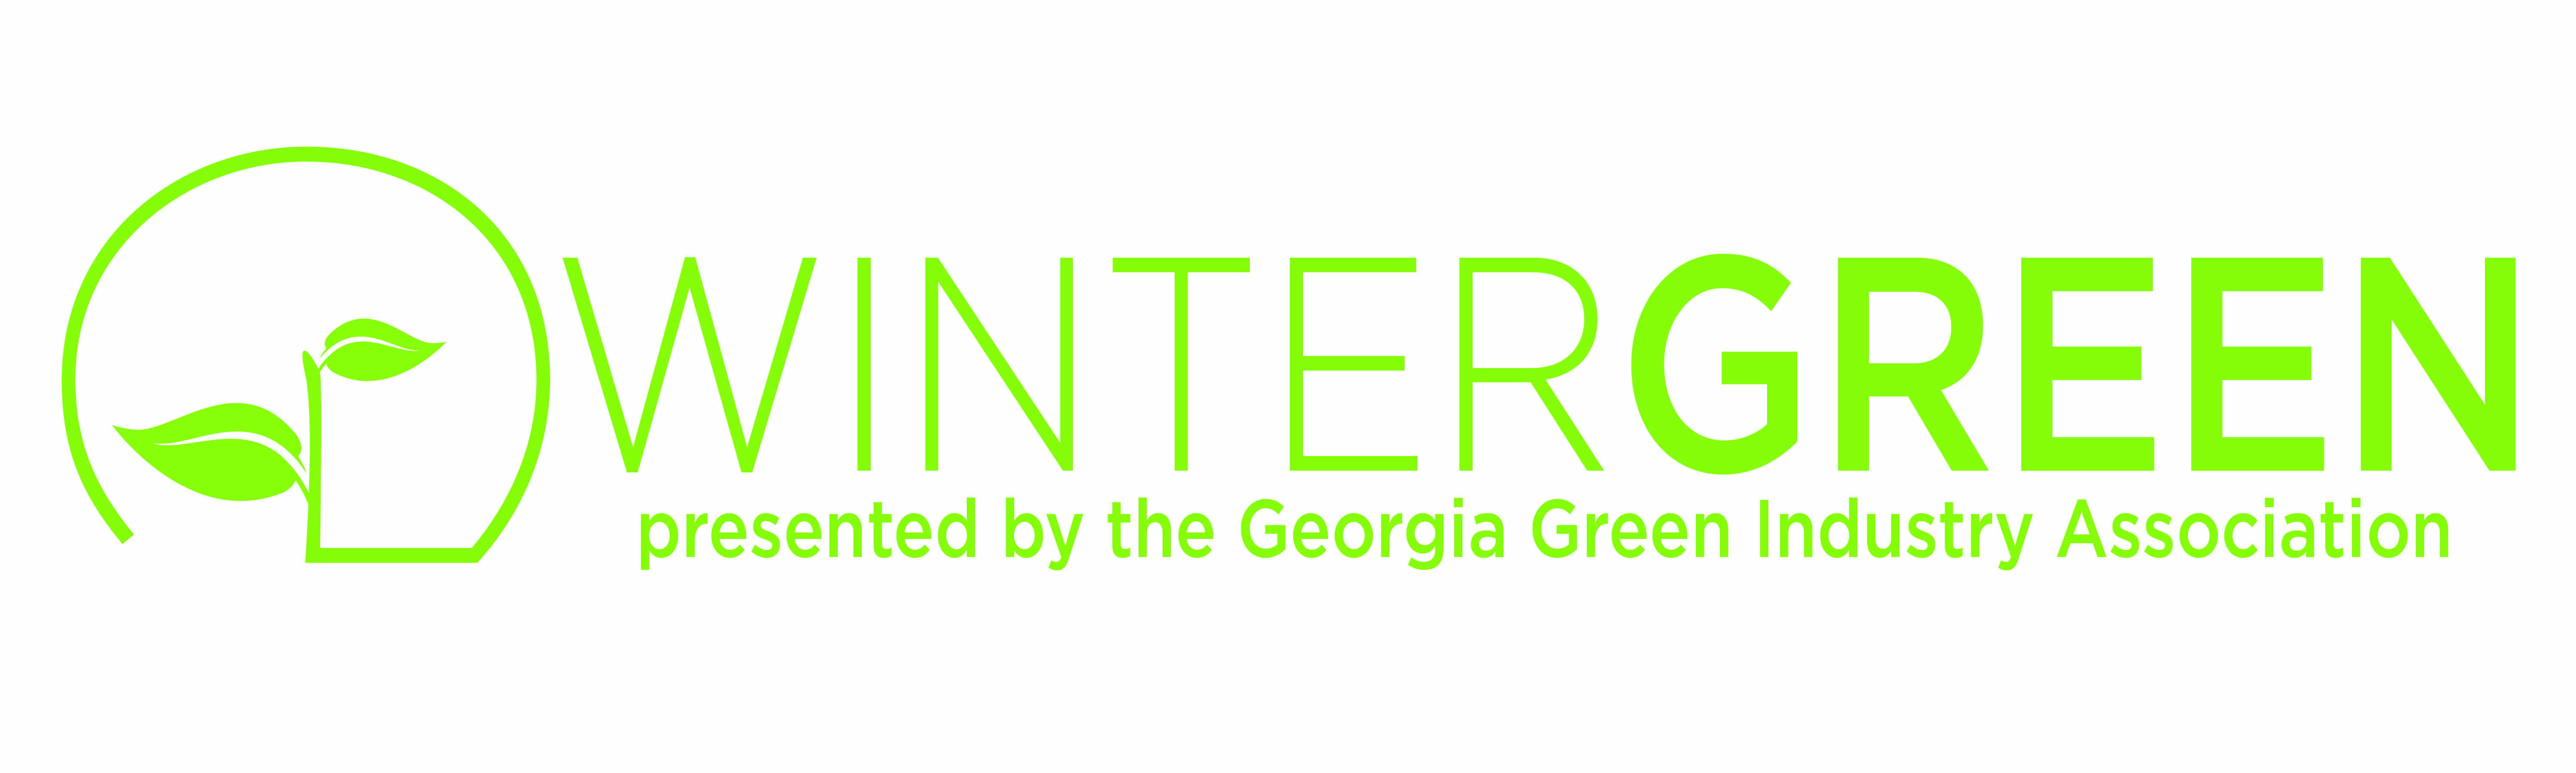 Winter Green - Georgian Green Industry Association Logo